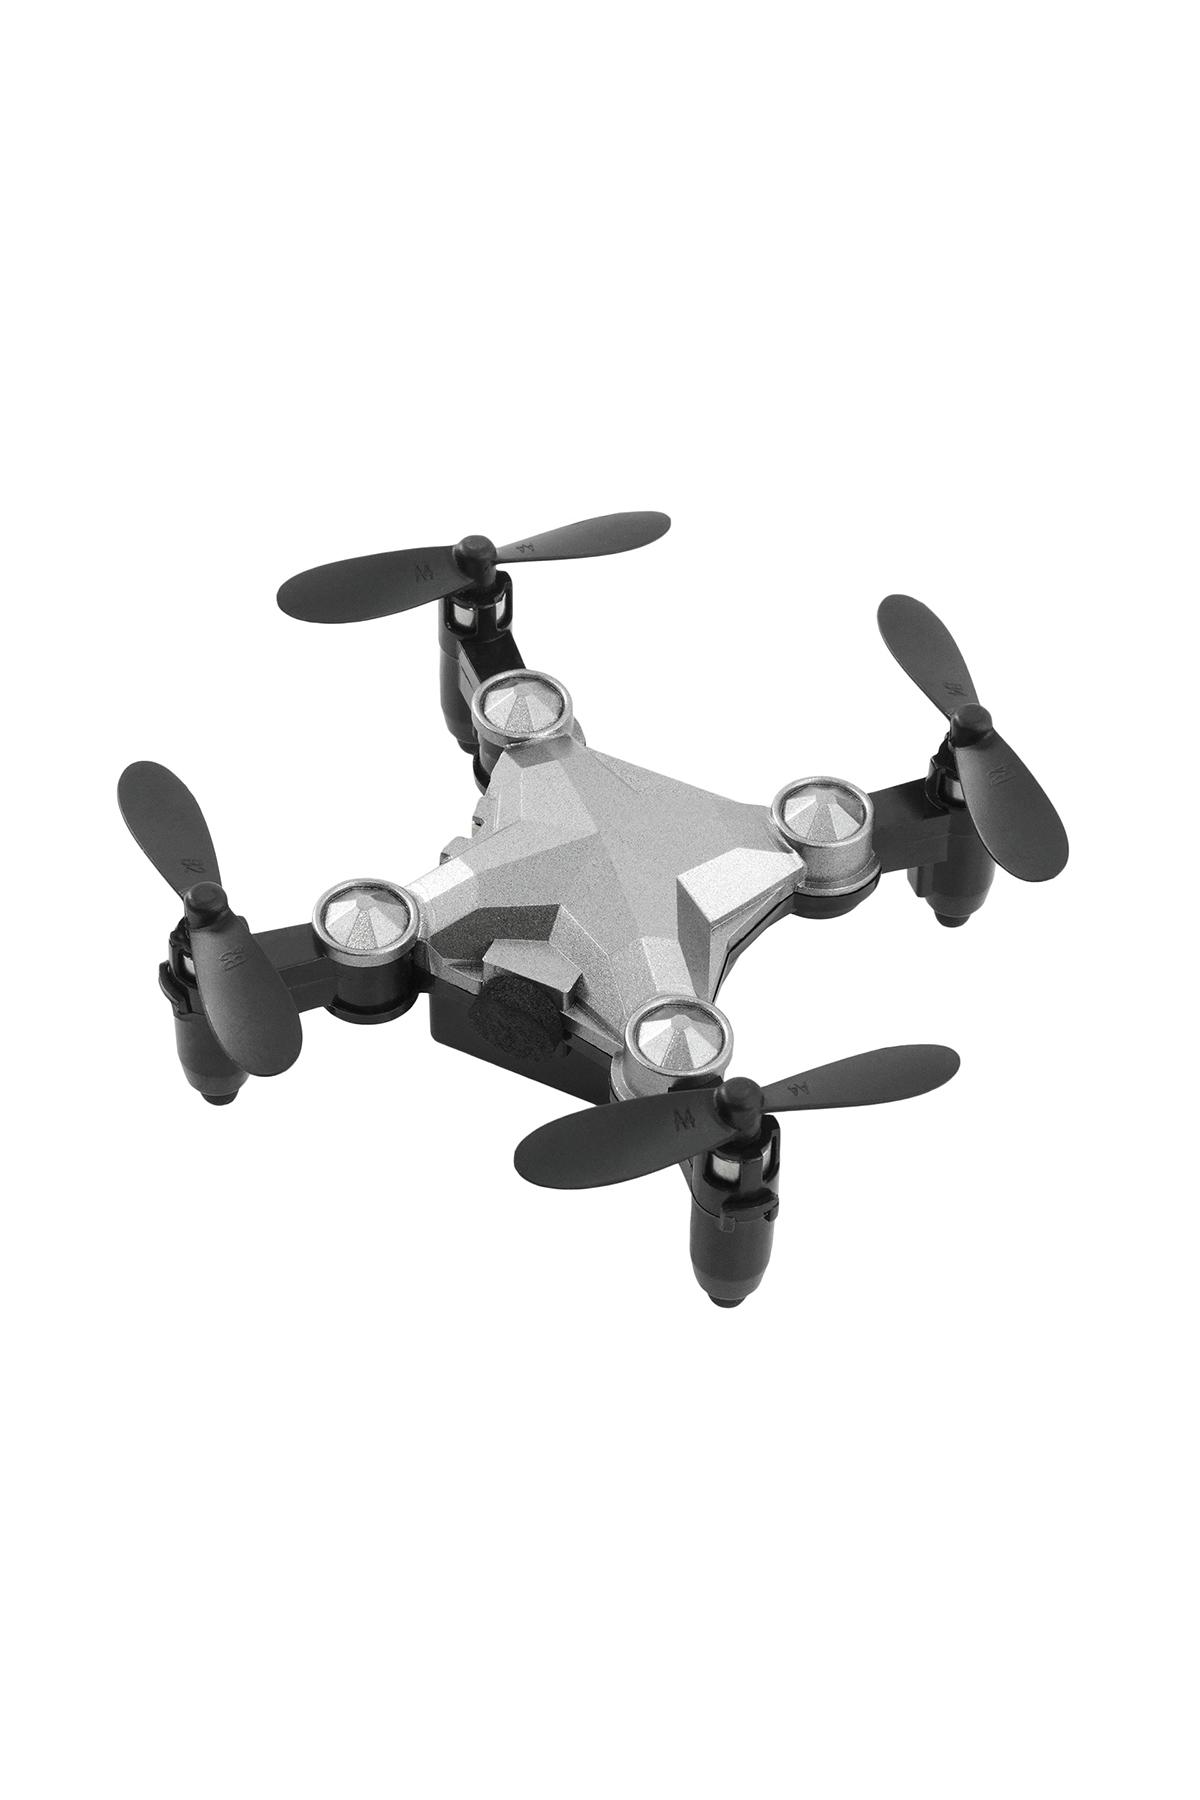 MF Product Atlas 0509 Mini Bilekten Kumandalı Drone Gri